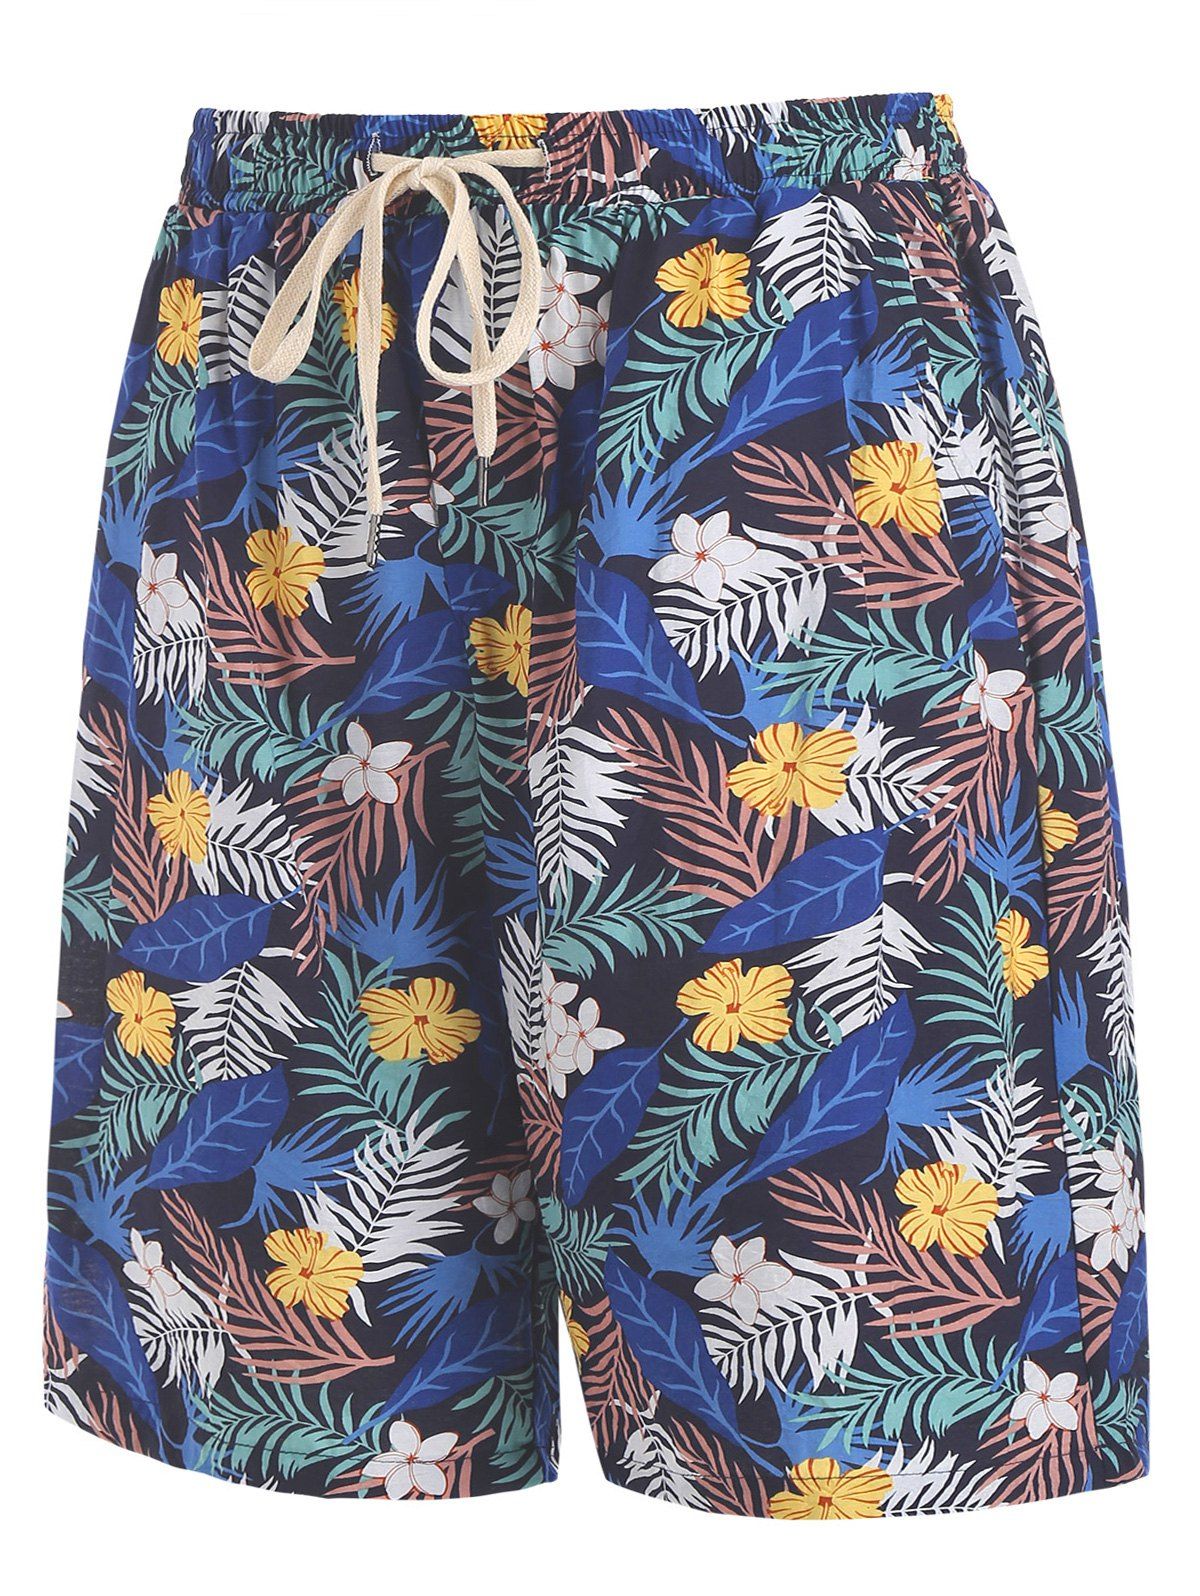 Tropical Floral Leaf Print Hawaii Board Shorts - multicolor A 2XL